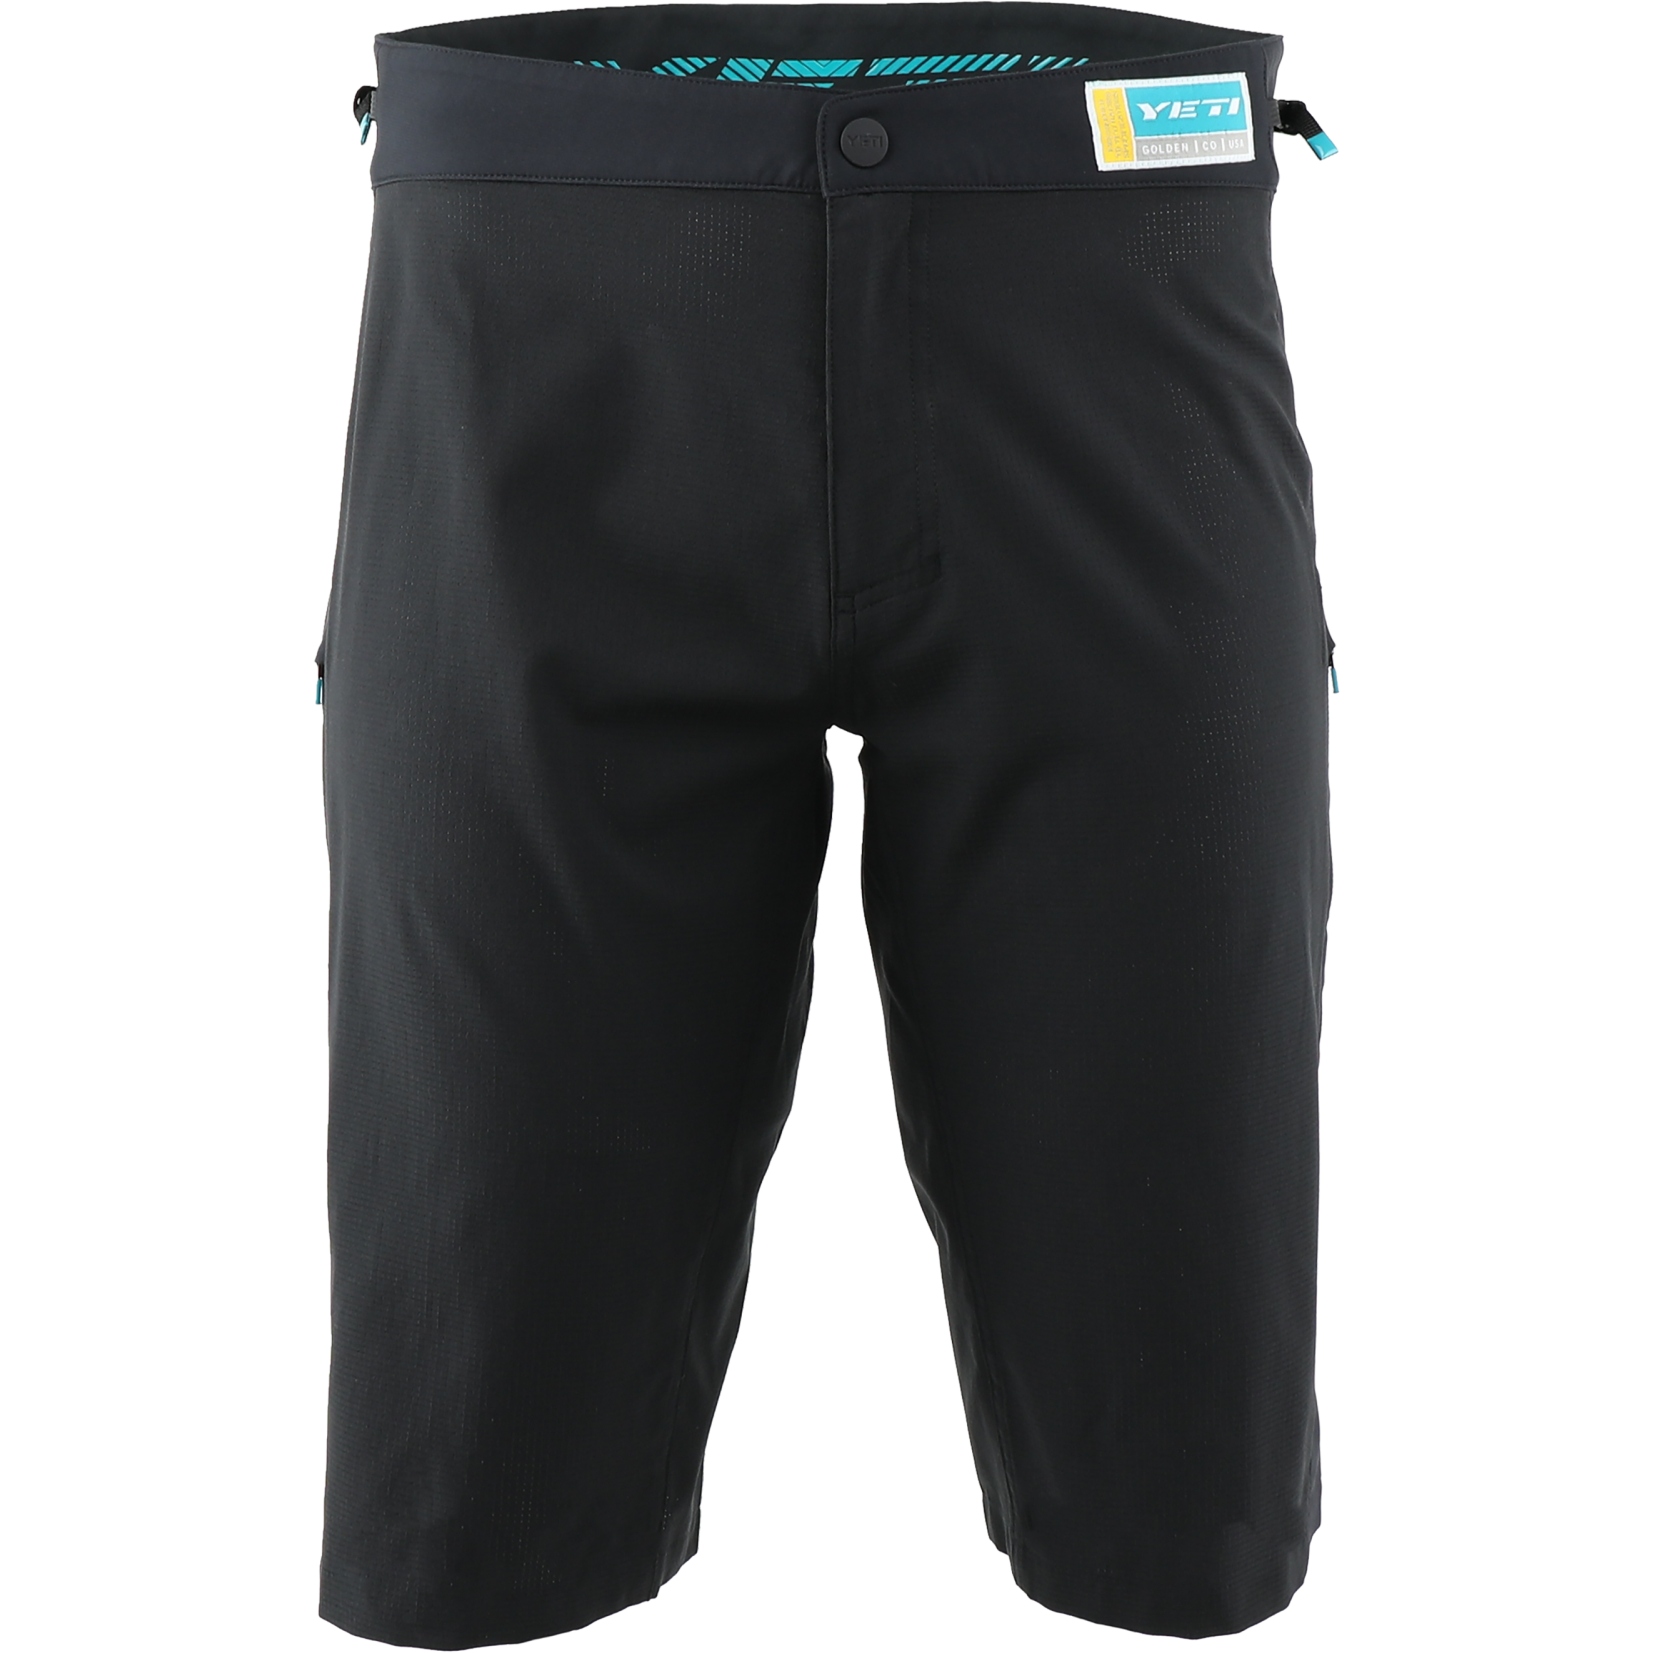 Productfoto van Yeti Cycles Enduro Shorts - Black